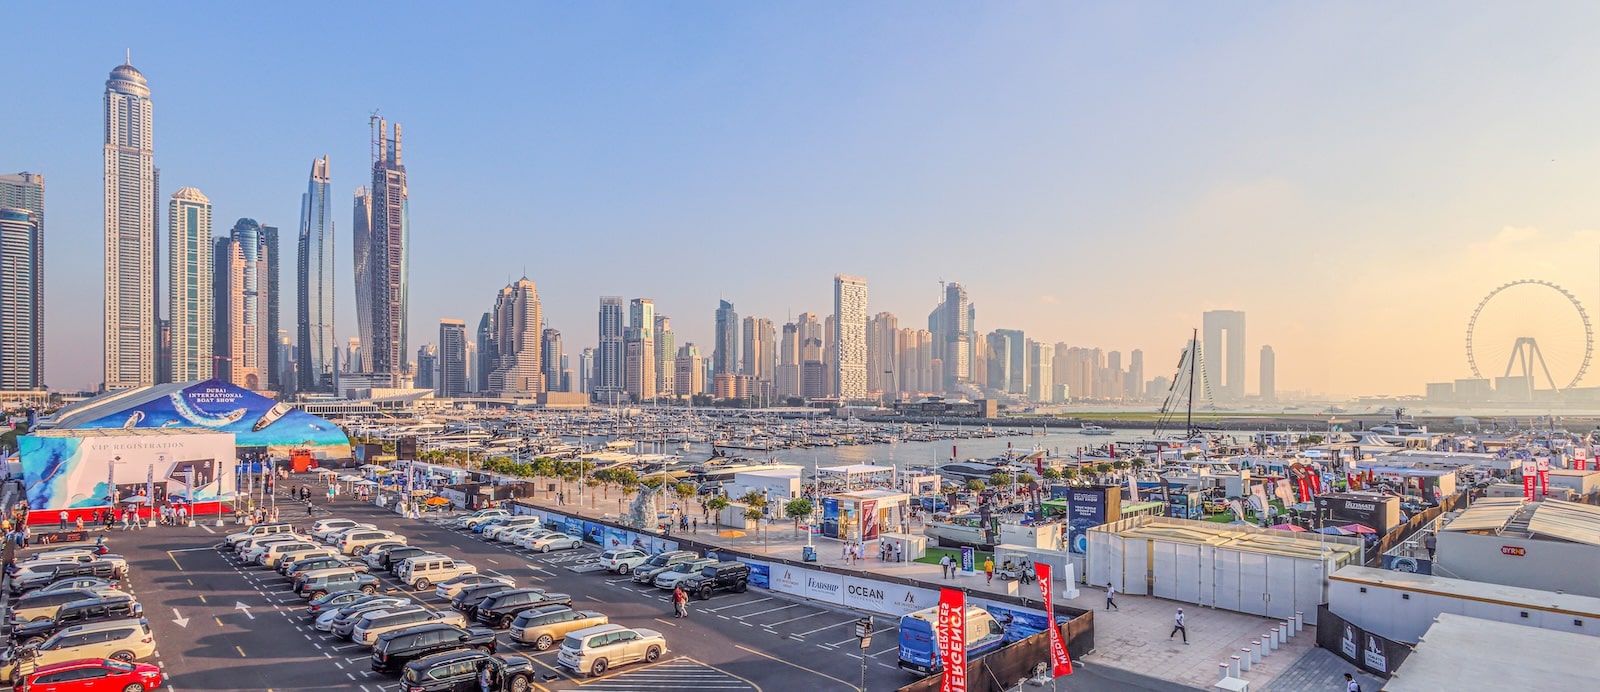 DUBAI INTERNATIONAL BOAT SHOW AERIAL VIEW